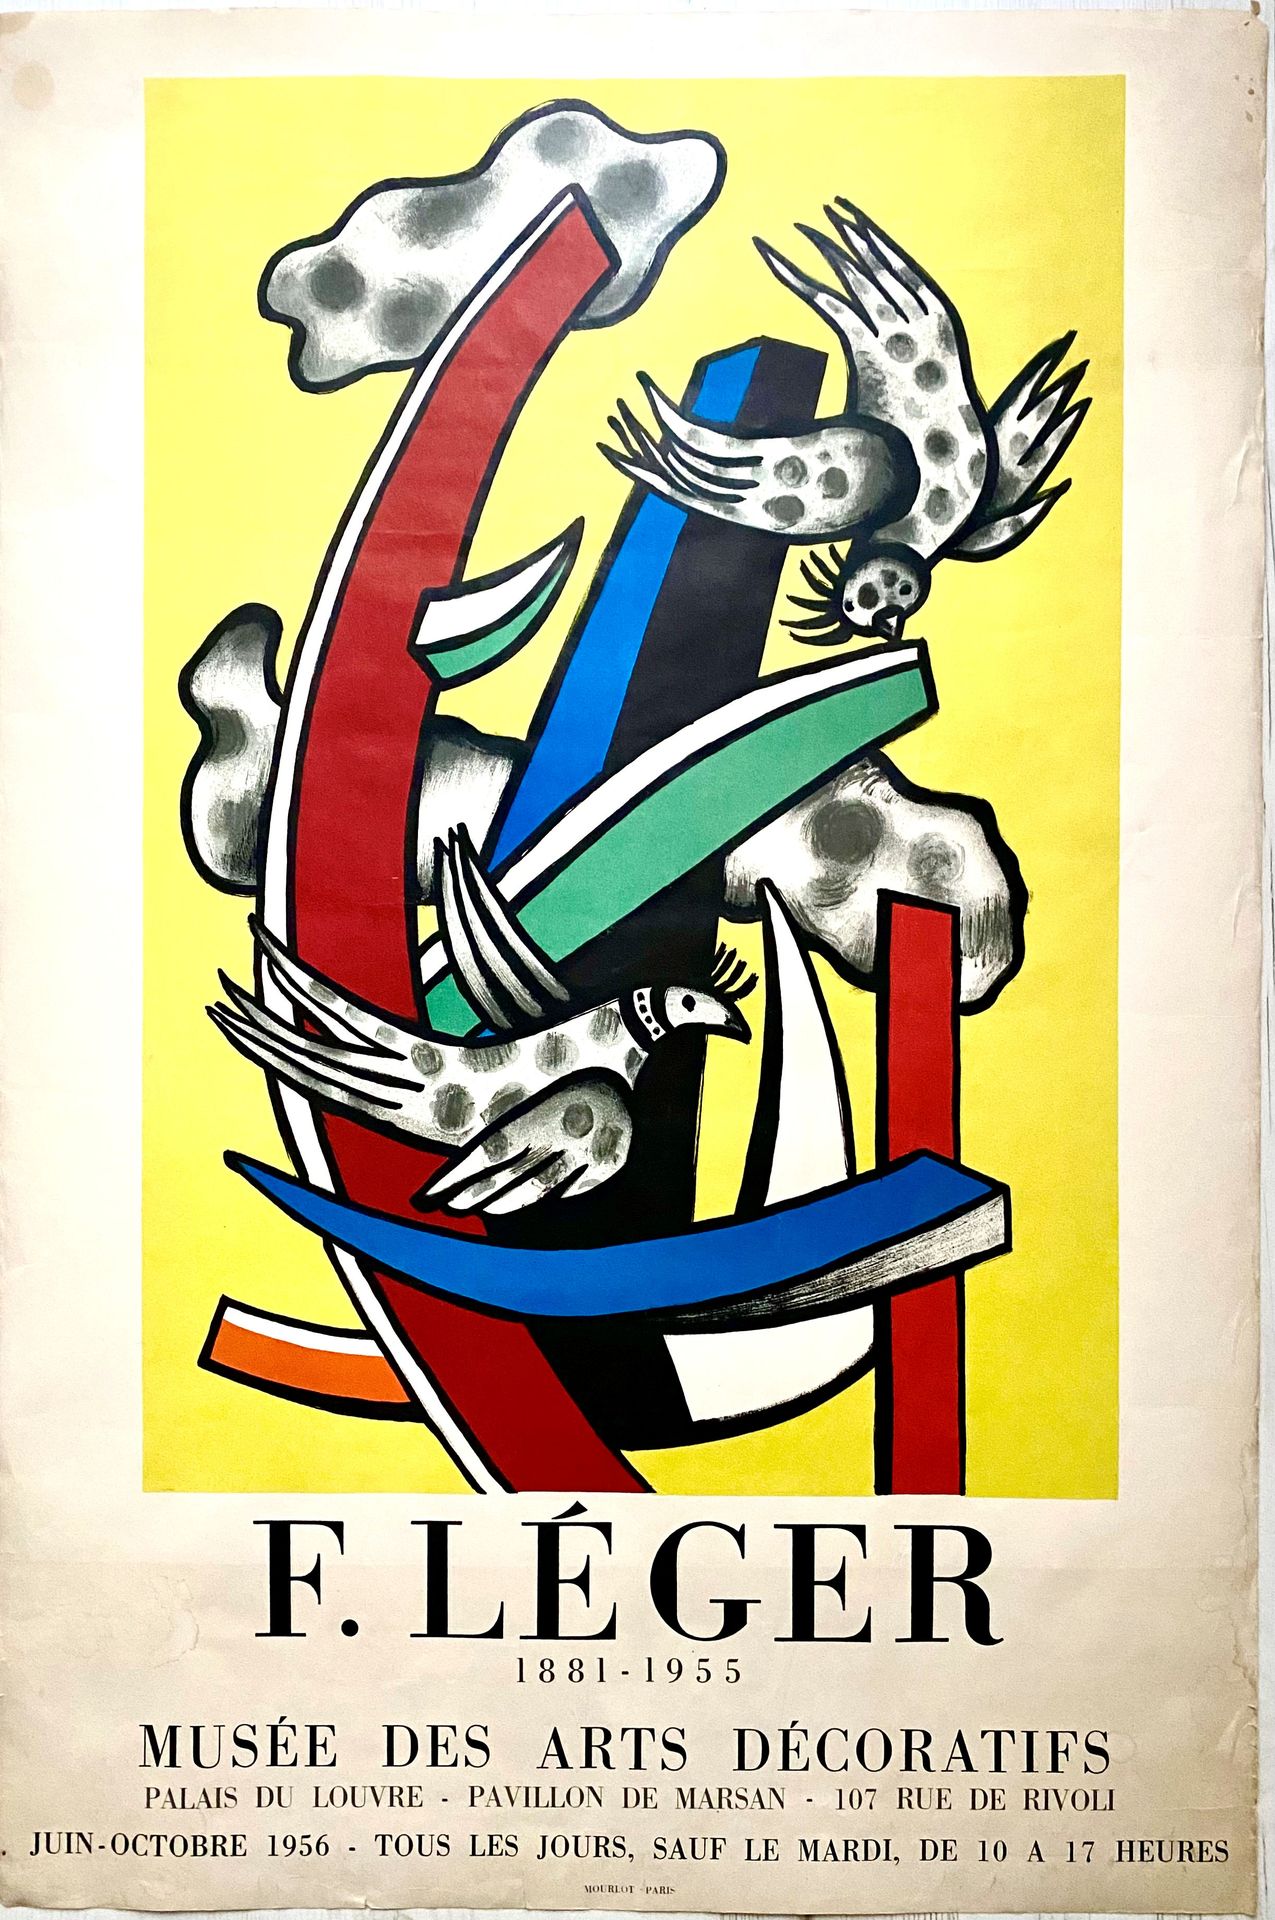 Fernand Leger 费尔南-莱热（1881-1955）与鸟的构图。

1956年他在装饰艺术博物馆的展览的石版画海报原件。

印刷：Mourlot

尺&hellip;